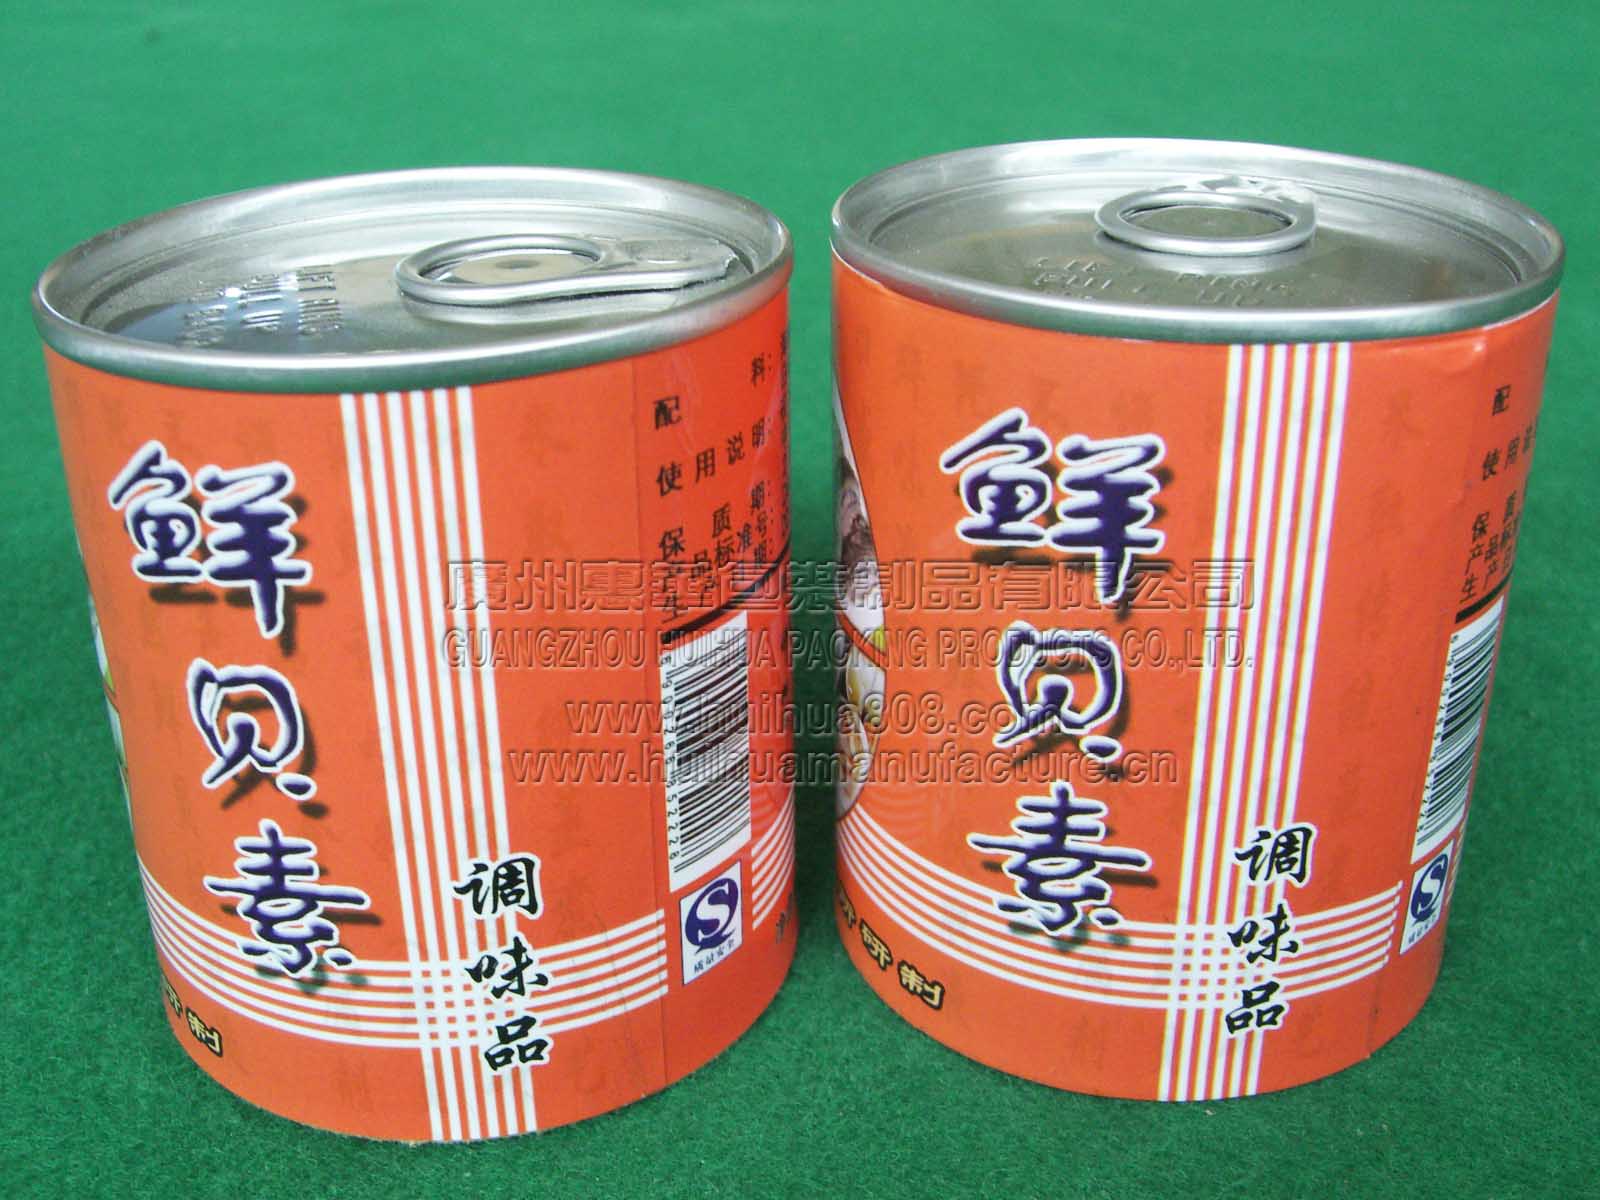 Supply milk powder paper cans